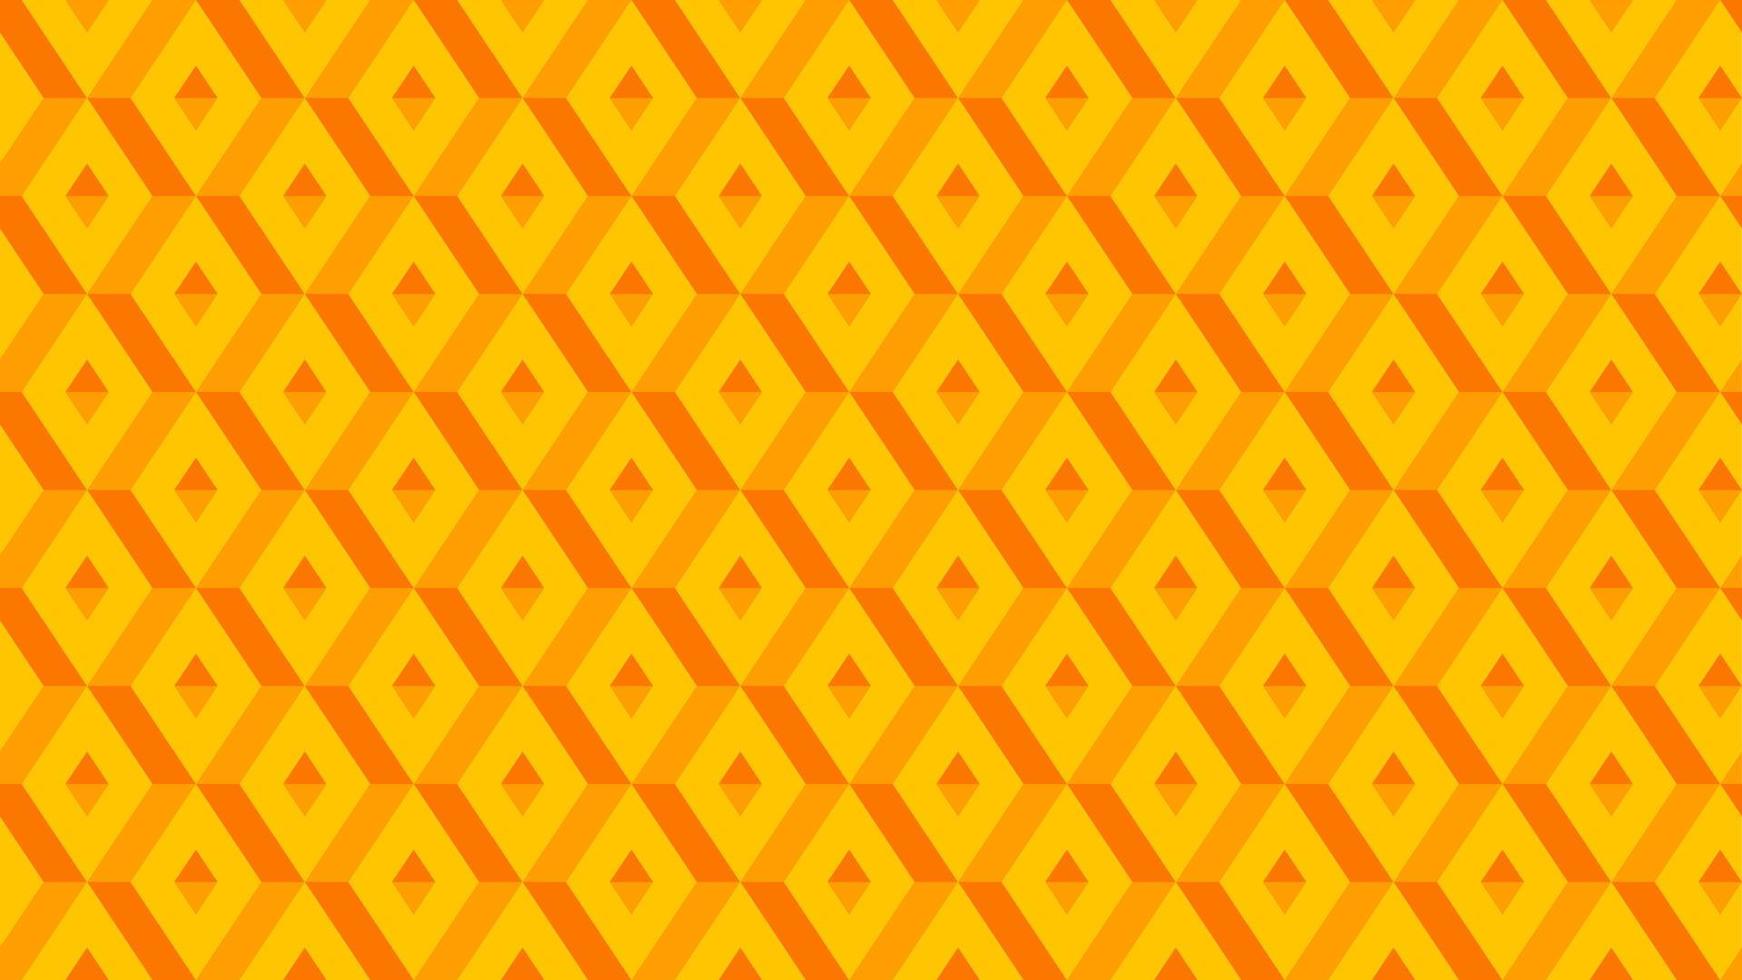 mönster av 3d optisk illusion. mönster av illusion kub. vektor illustration av 3d orange fyrkant. geometrisk illusorisk av kuber för design grafisk, bakgrund, tapet, layout eller konst